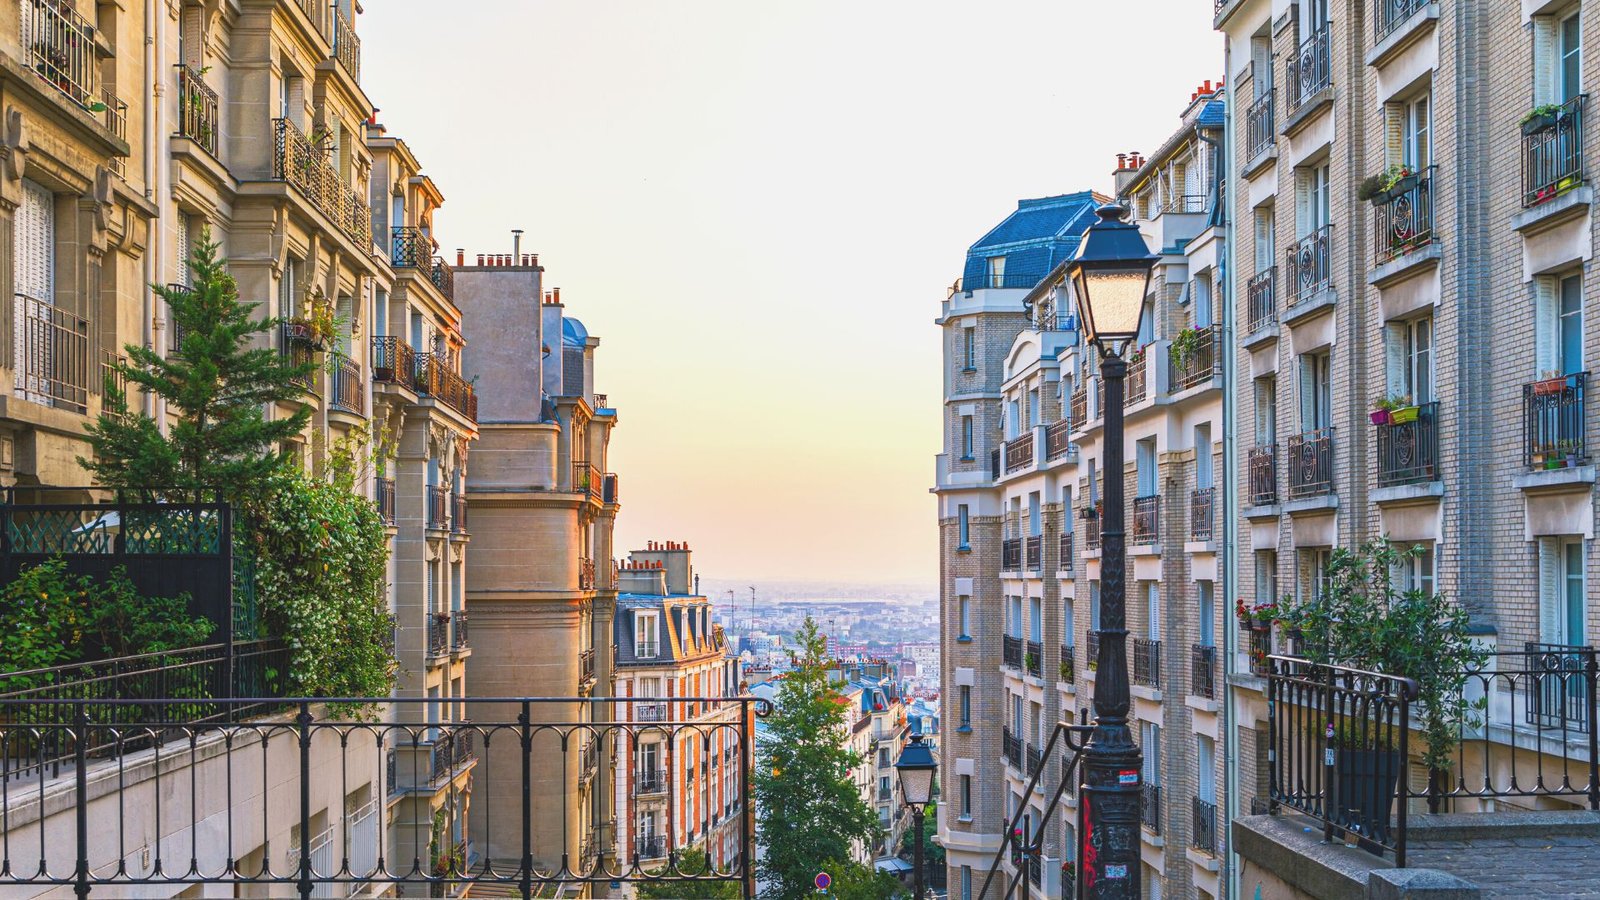 barrio de Montmartre: Este histórico barrio de artistas